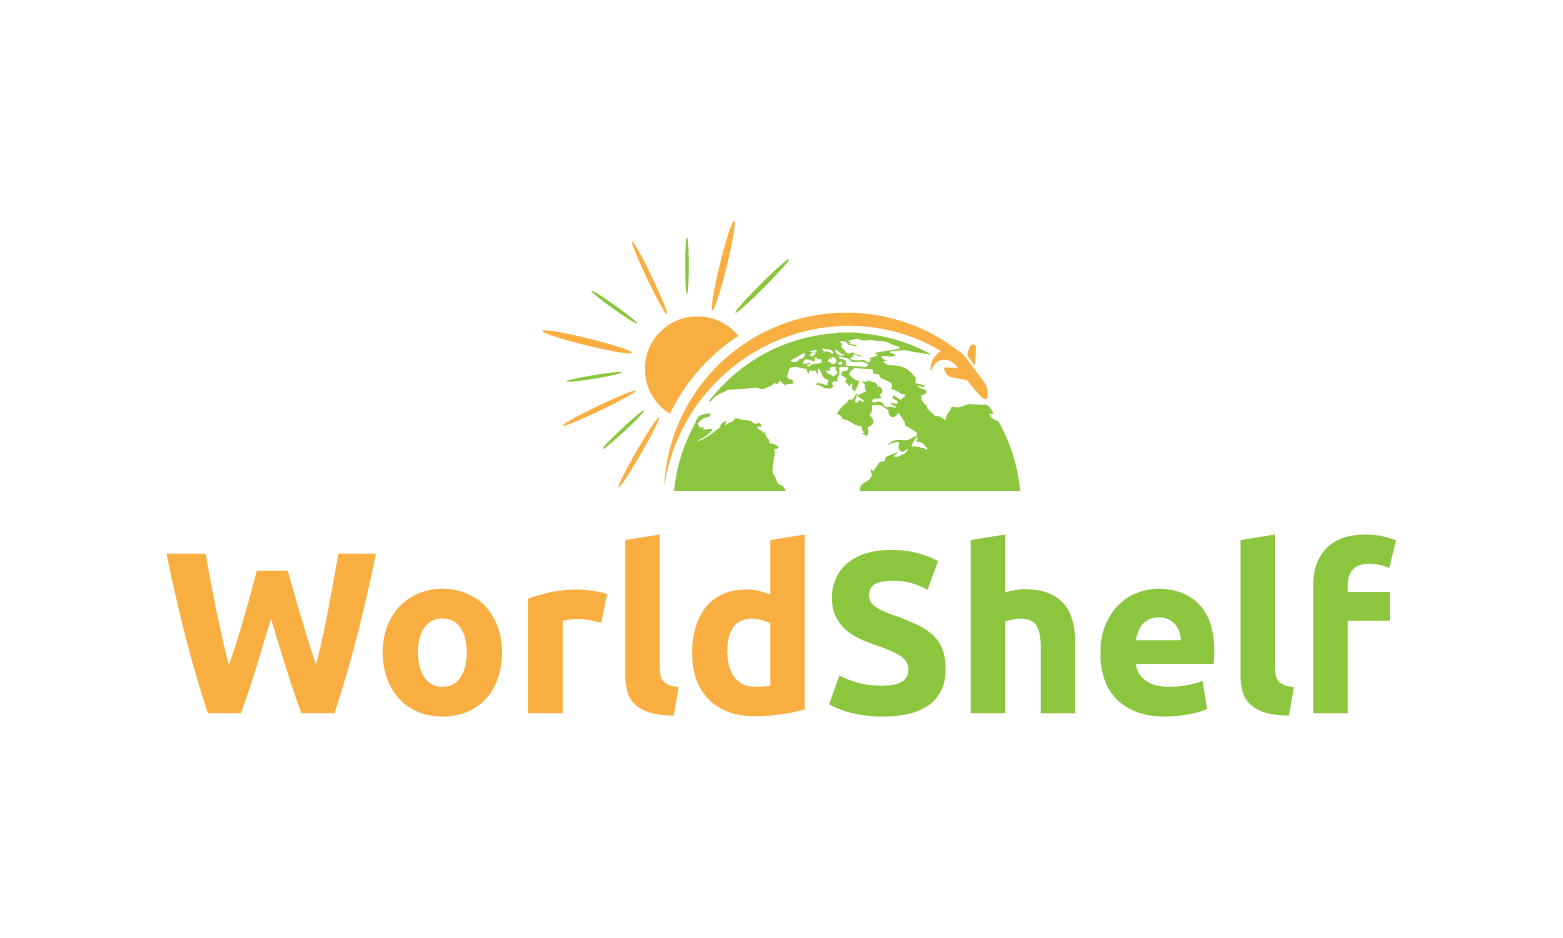 WorldShelf.com - Creative brandable domain for sale